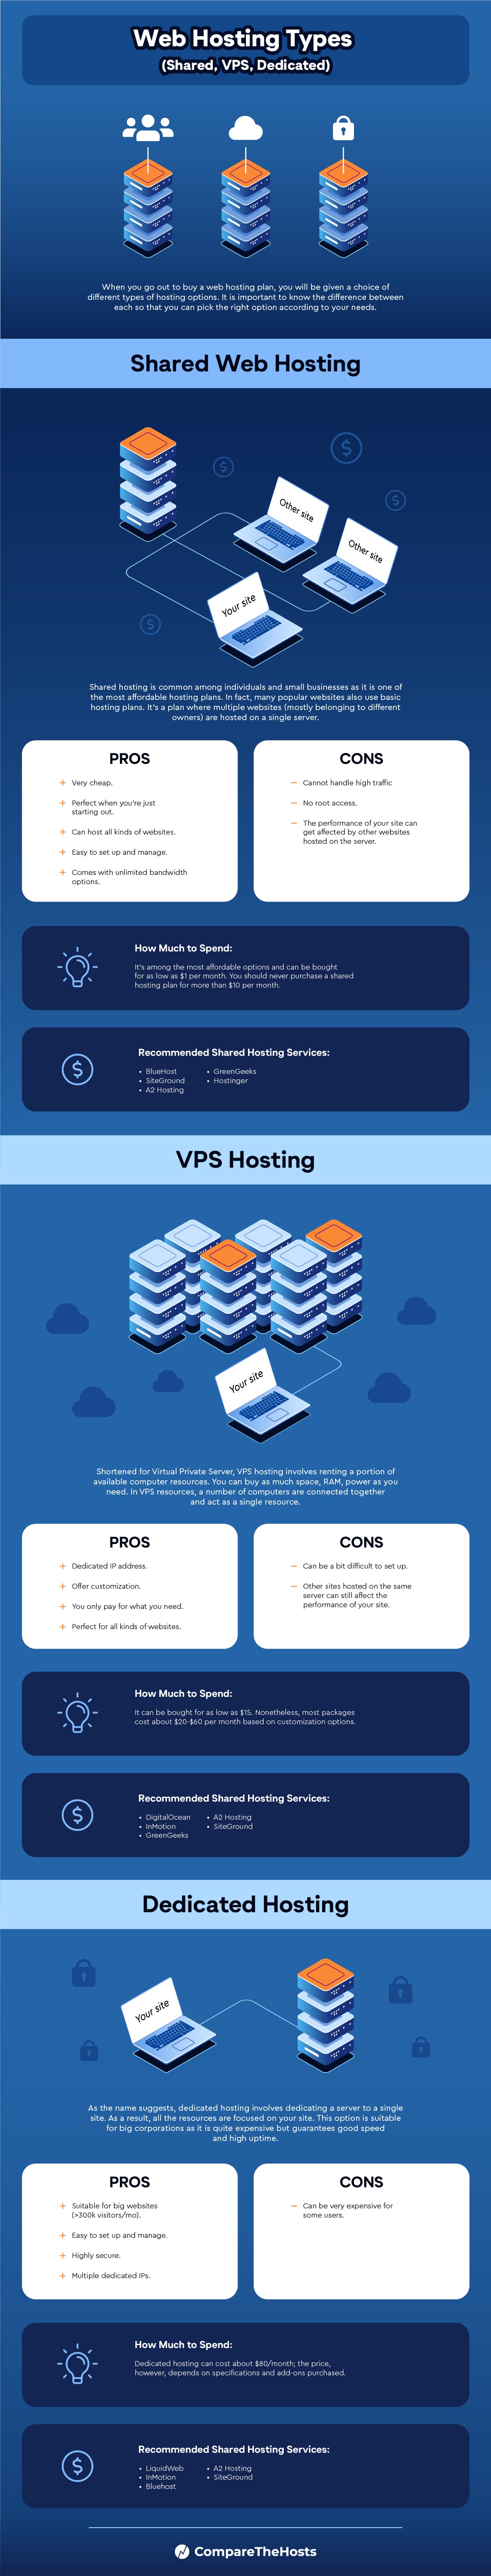 Types of Web Hosting (Shared, Cloud, WordPress & Dedicated)